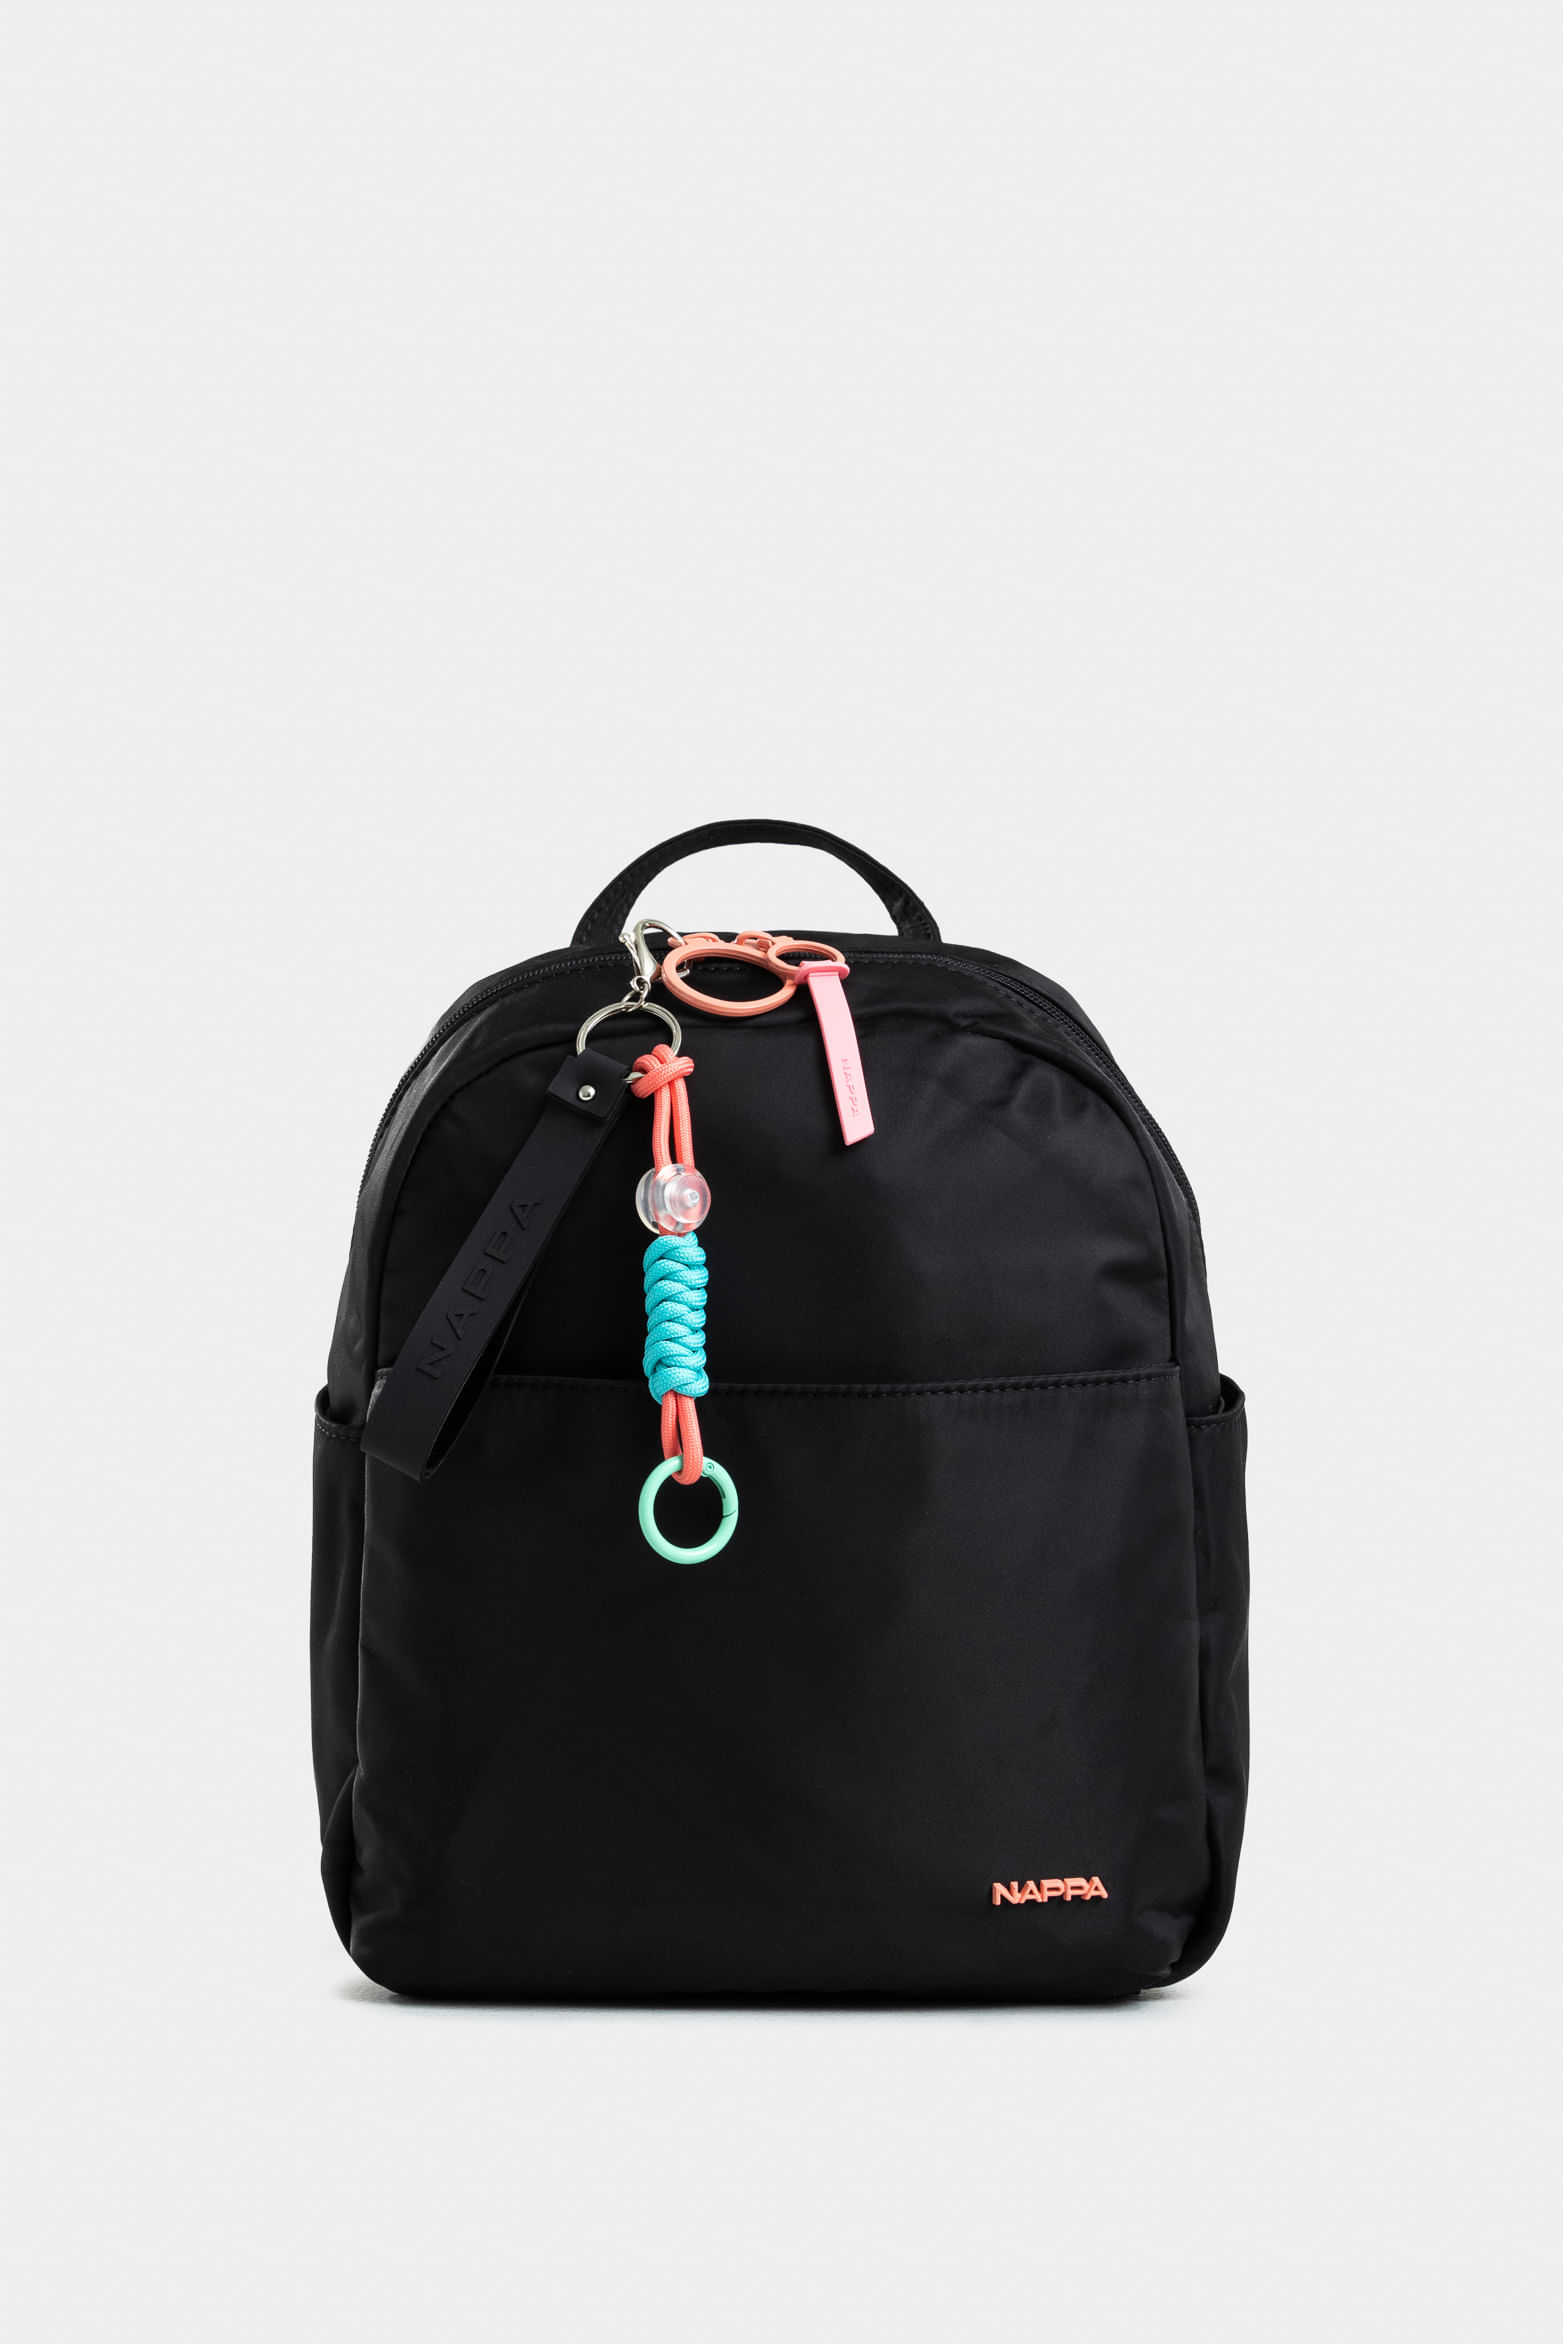 Mochila para mujer, mochila de viaje de nailon, bolsa escolar pequeña negra  para niñas, Azul / Patchwork, talla única, Mochilas de viaje